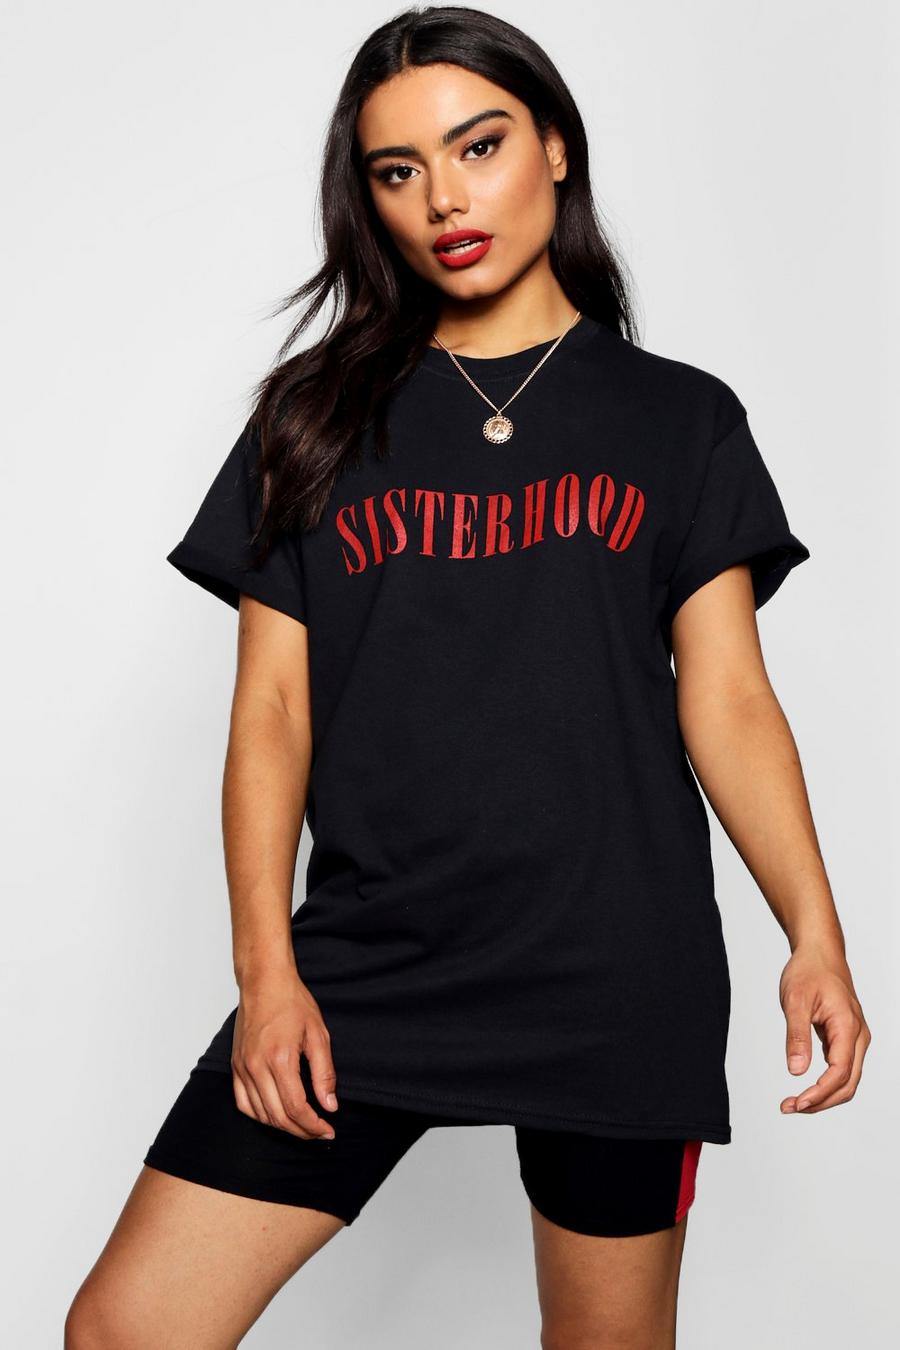 Camiseta con eslogan “Sister Hood” image number 1